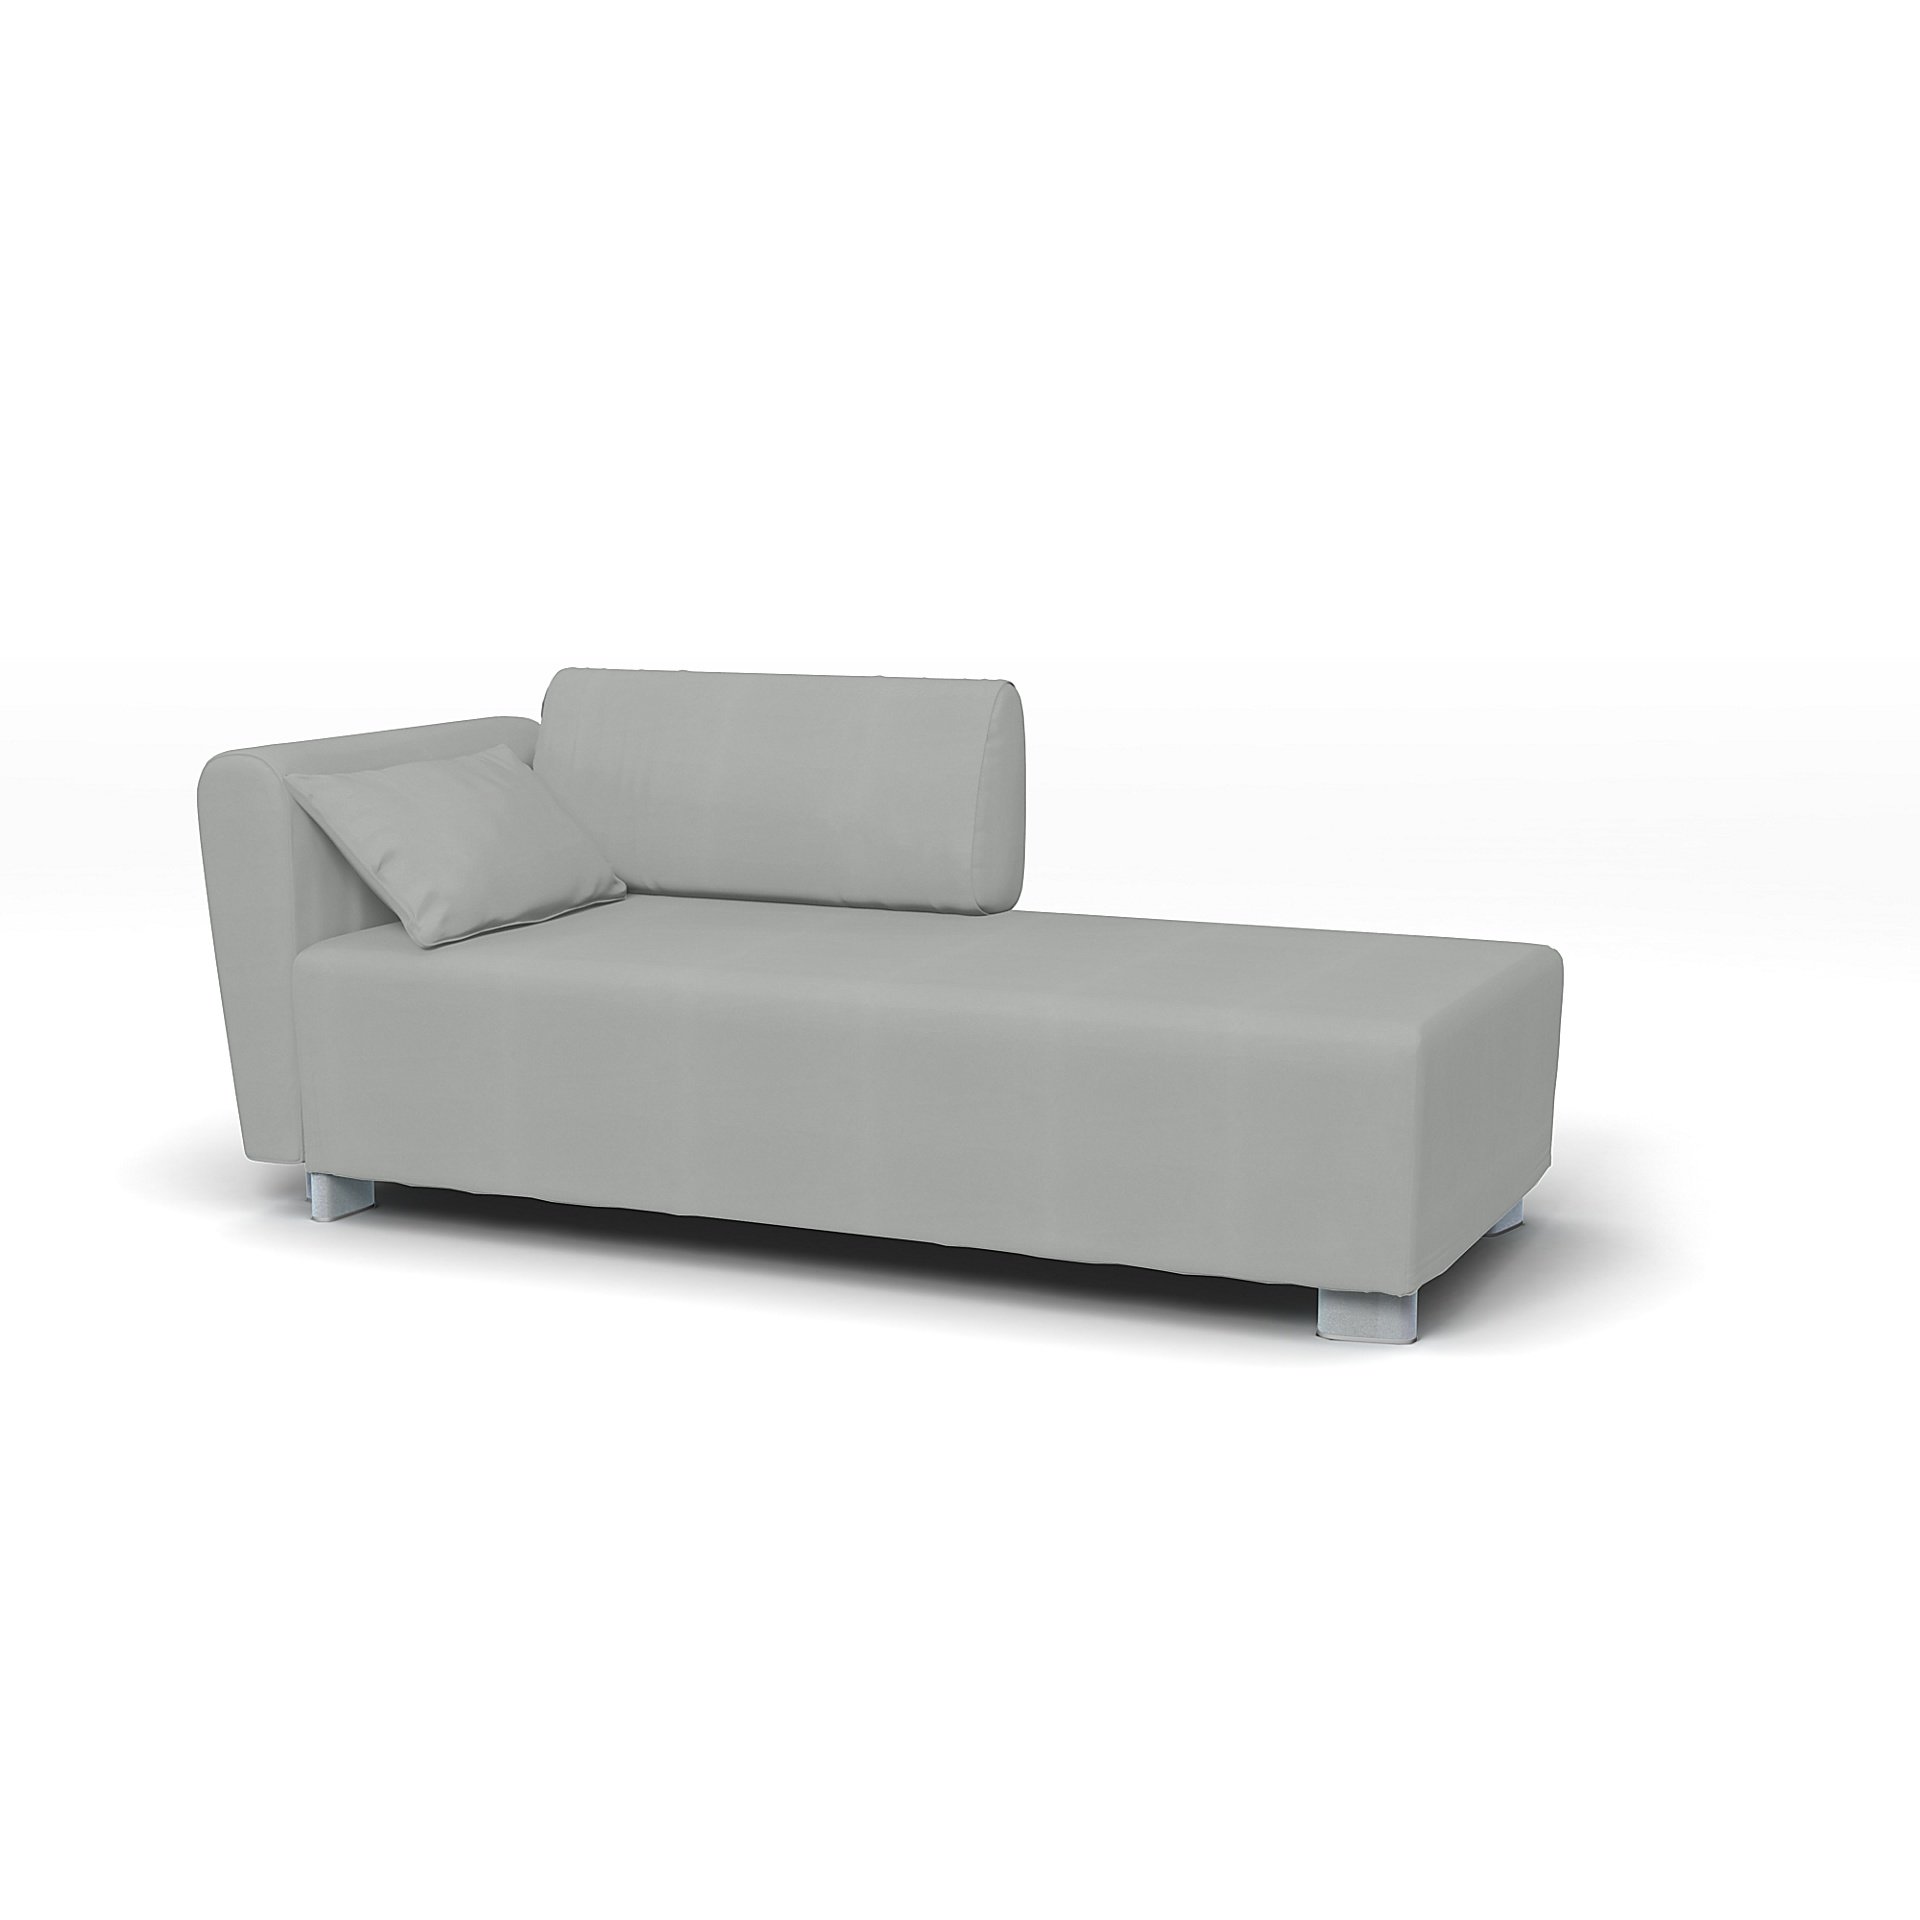 IKEA - Mysinge Chaise Longue with Armrest Cover, Silver Grey, Cotton - Bemz